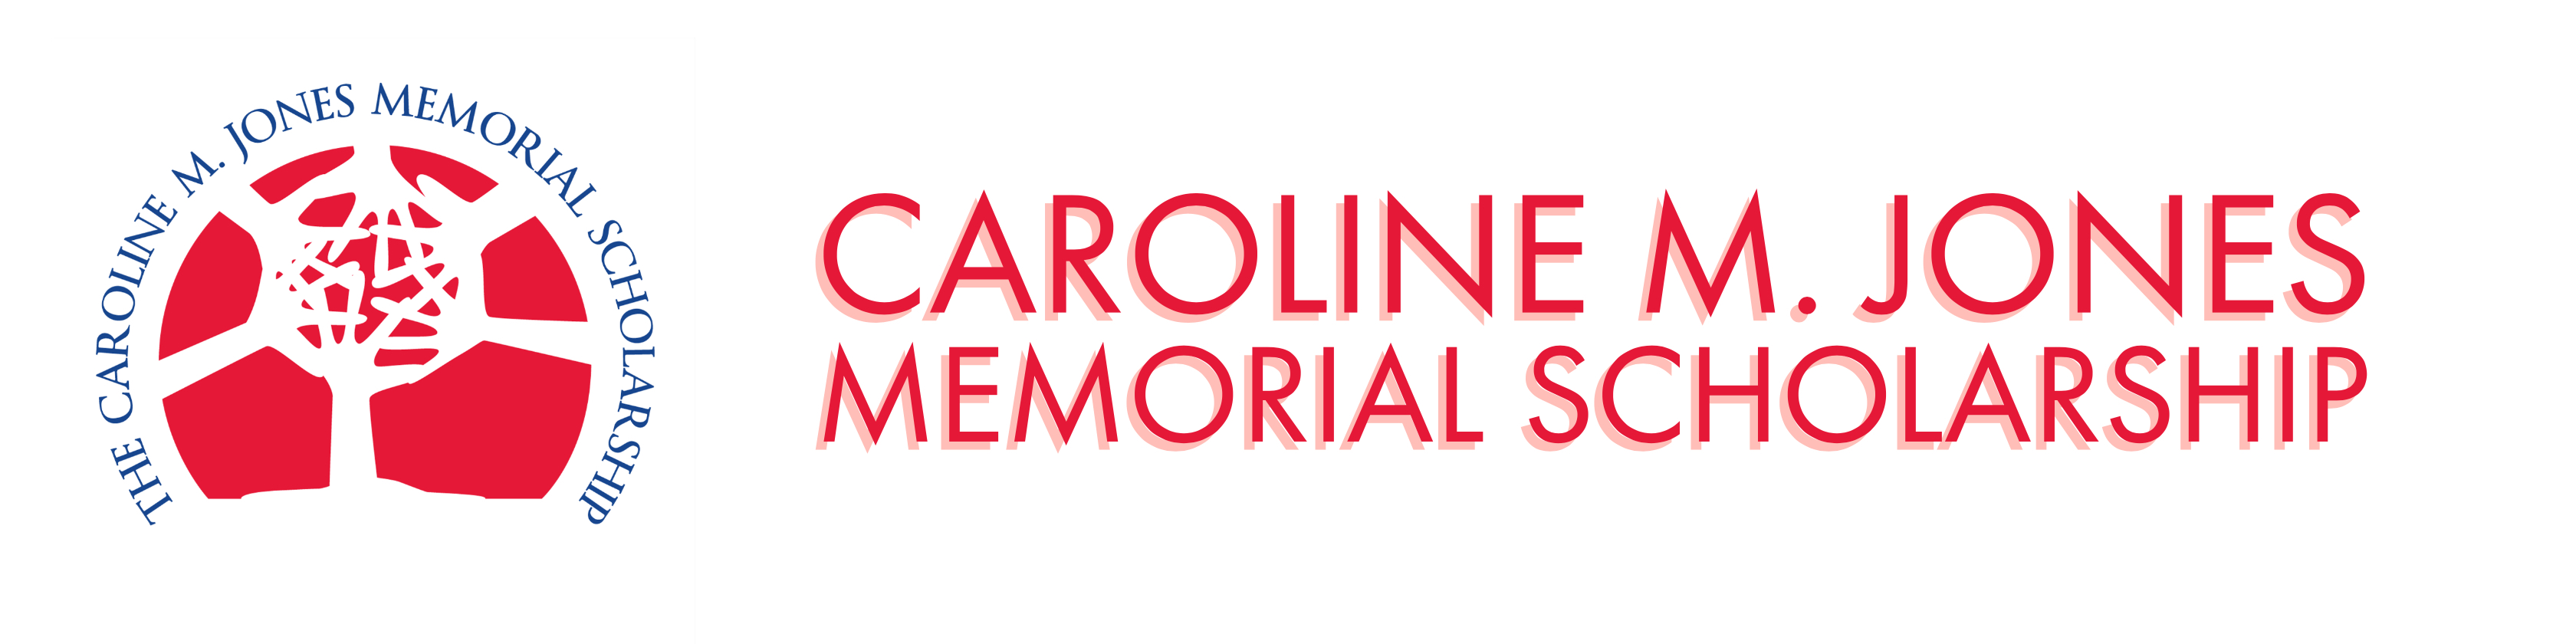 Caroline M. Jones Memorial Scholarship